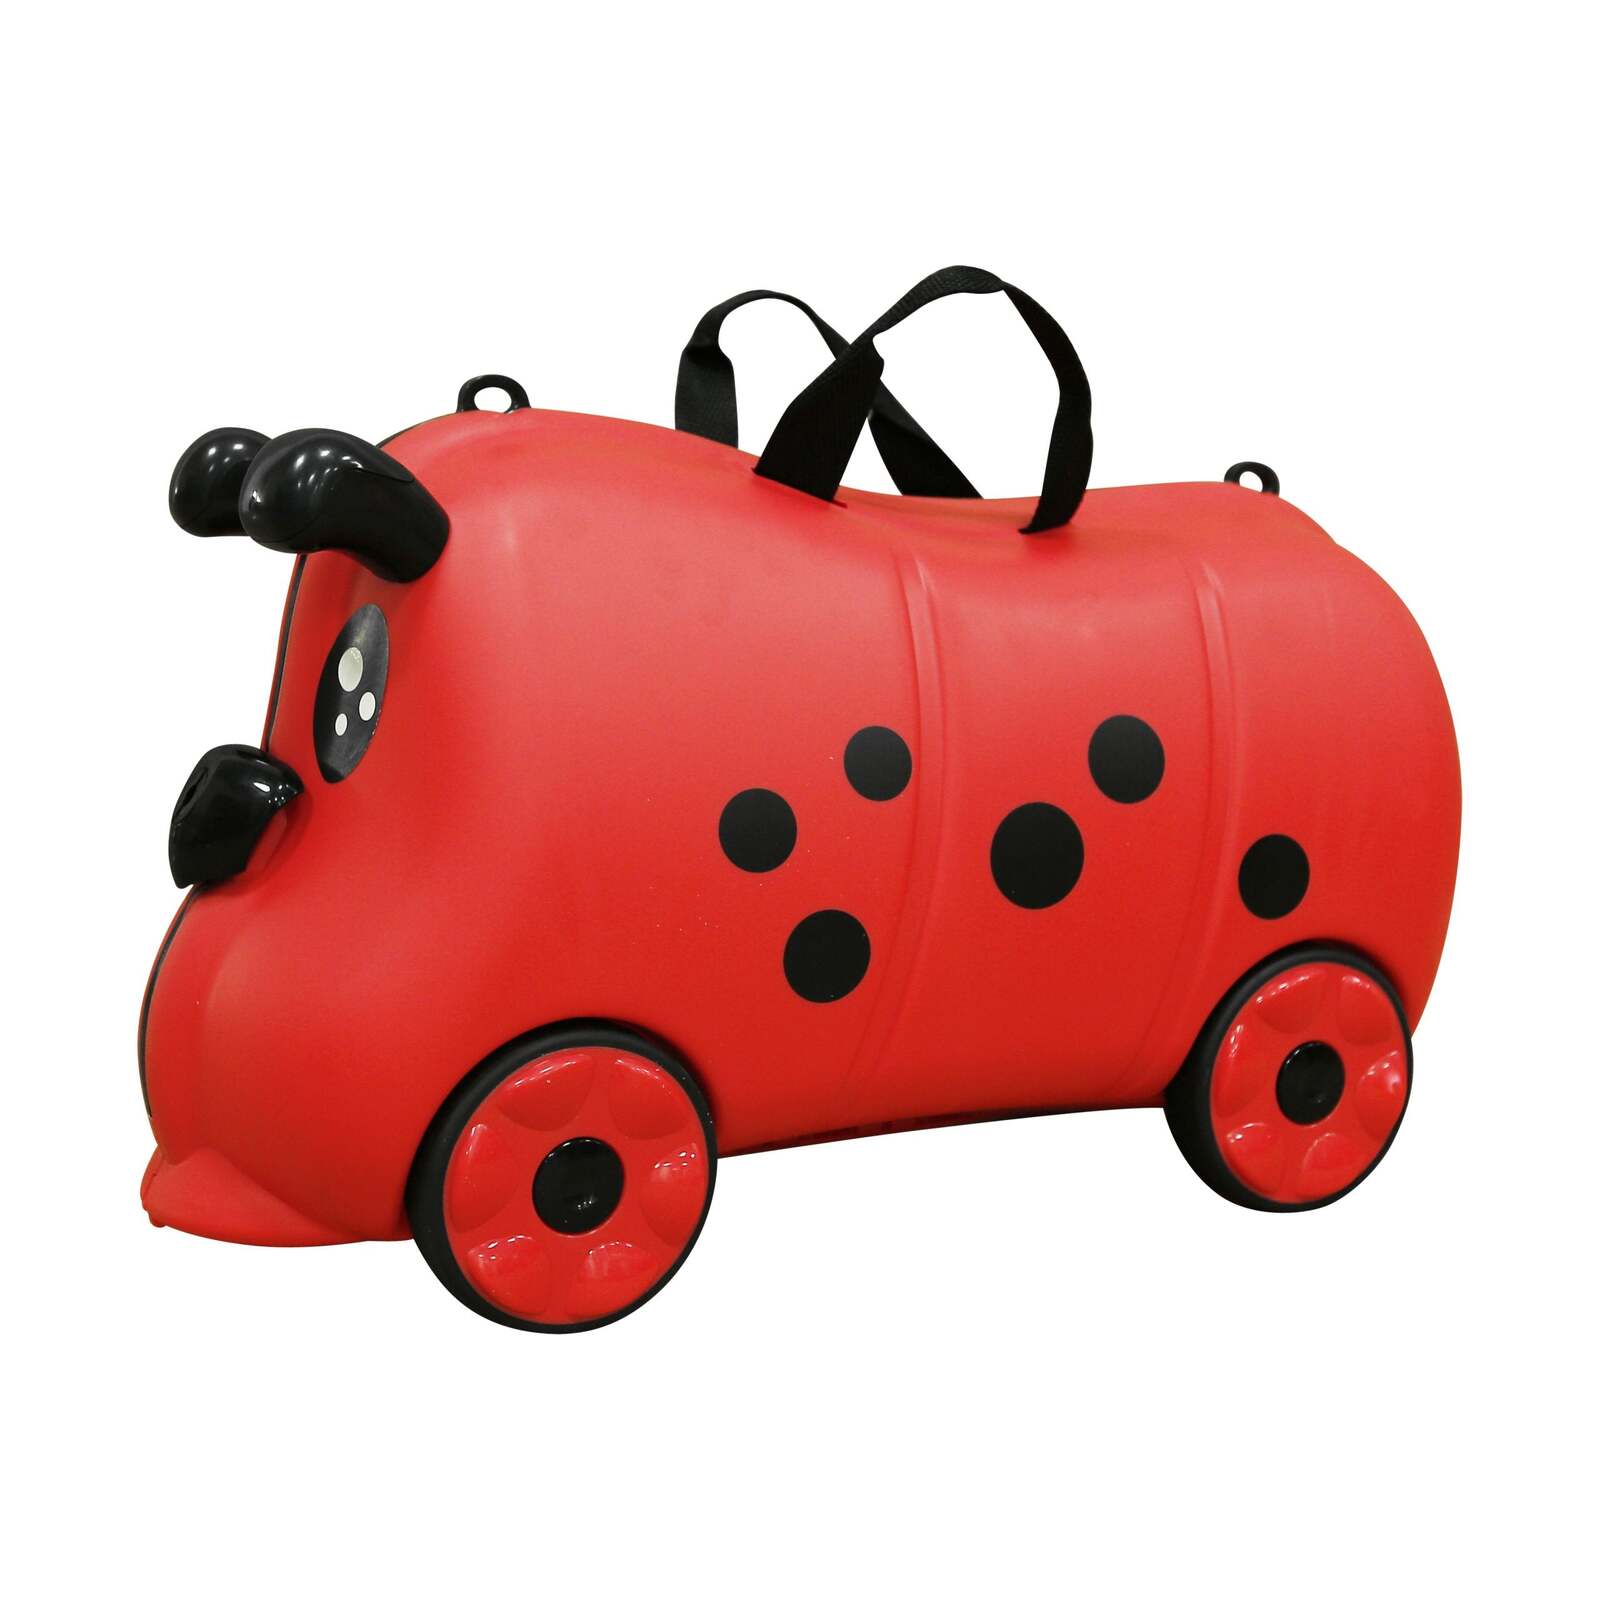 Kids/Children 18L Travel Cabin Luggage Trolley Ride On Wheel Suitcase Red/Black